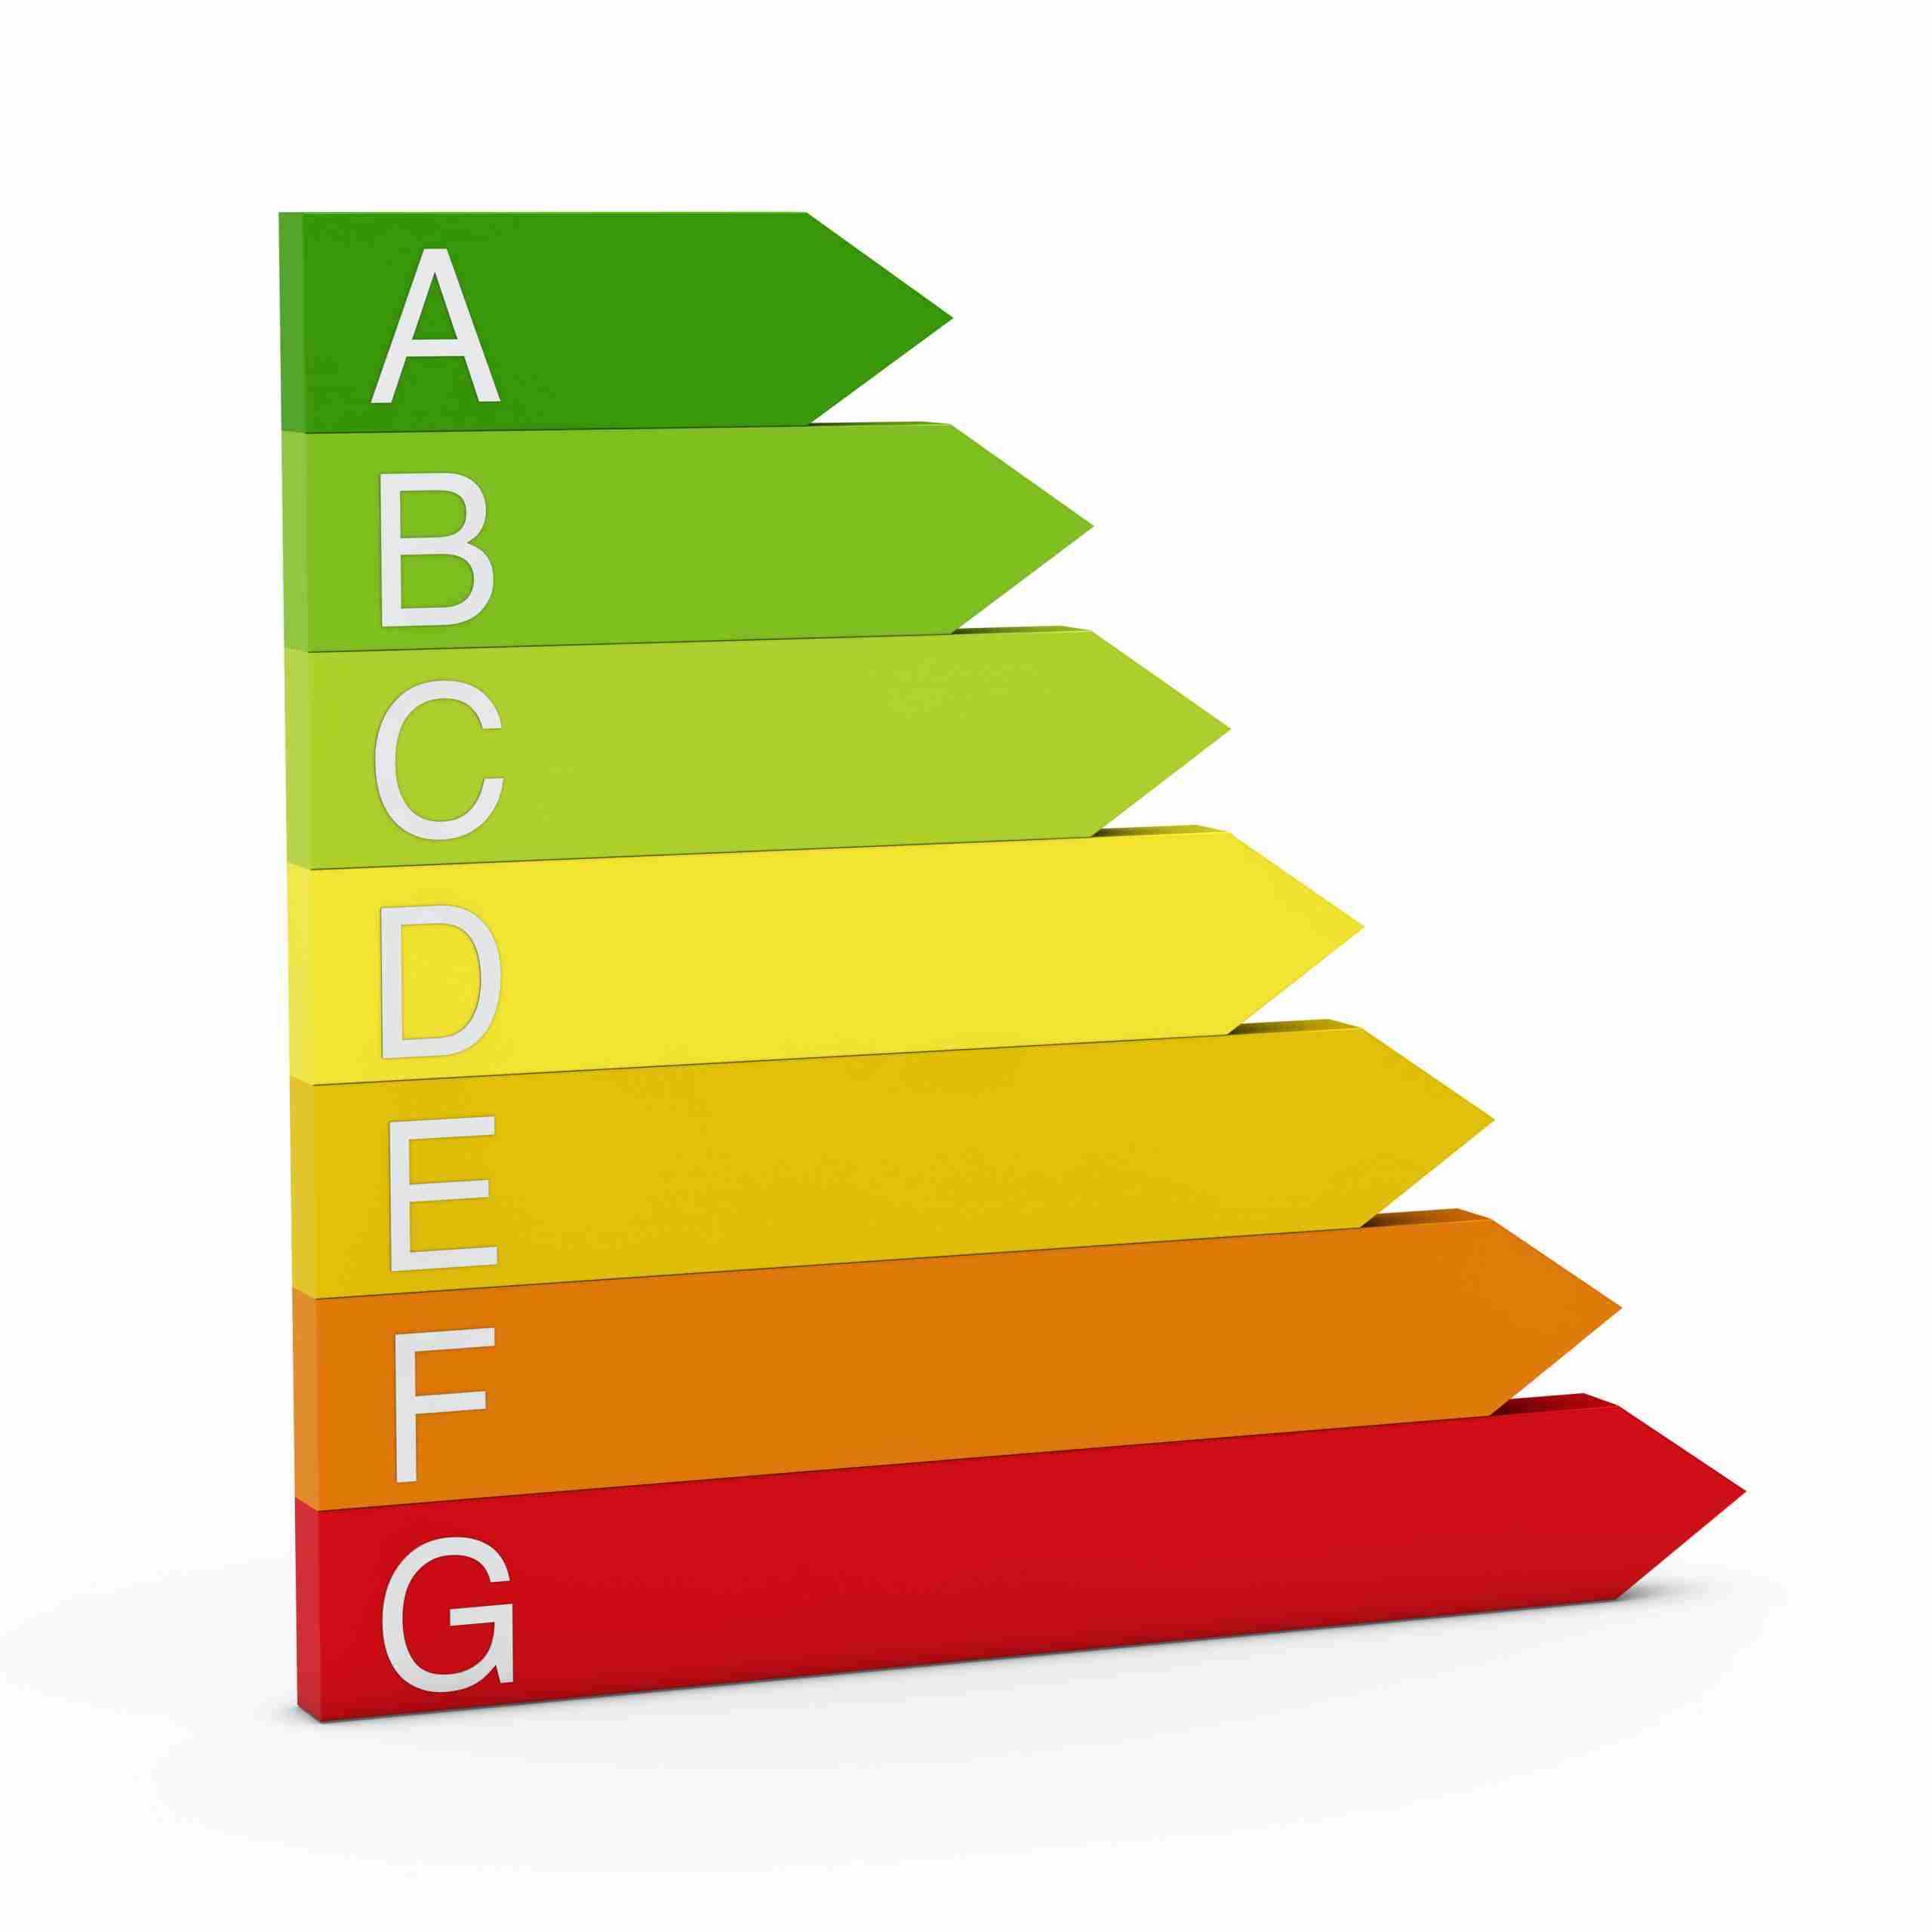 Gráfica de calificación energética: A (verde) a G (rojo).